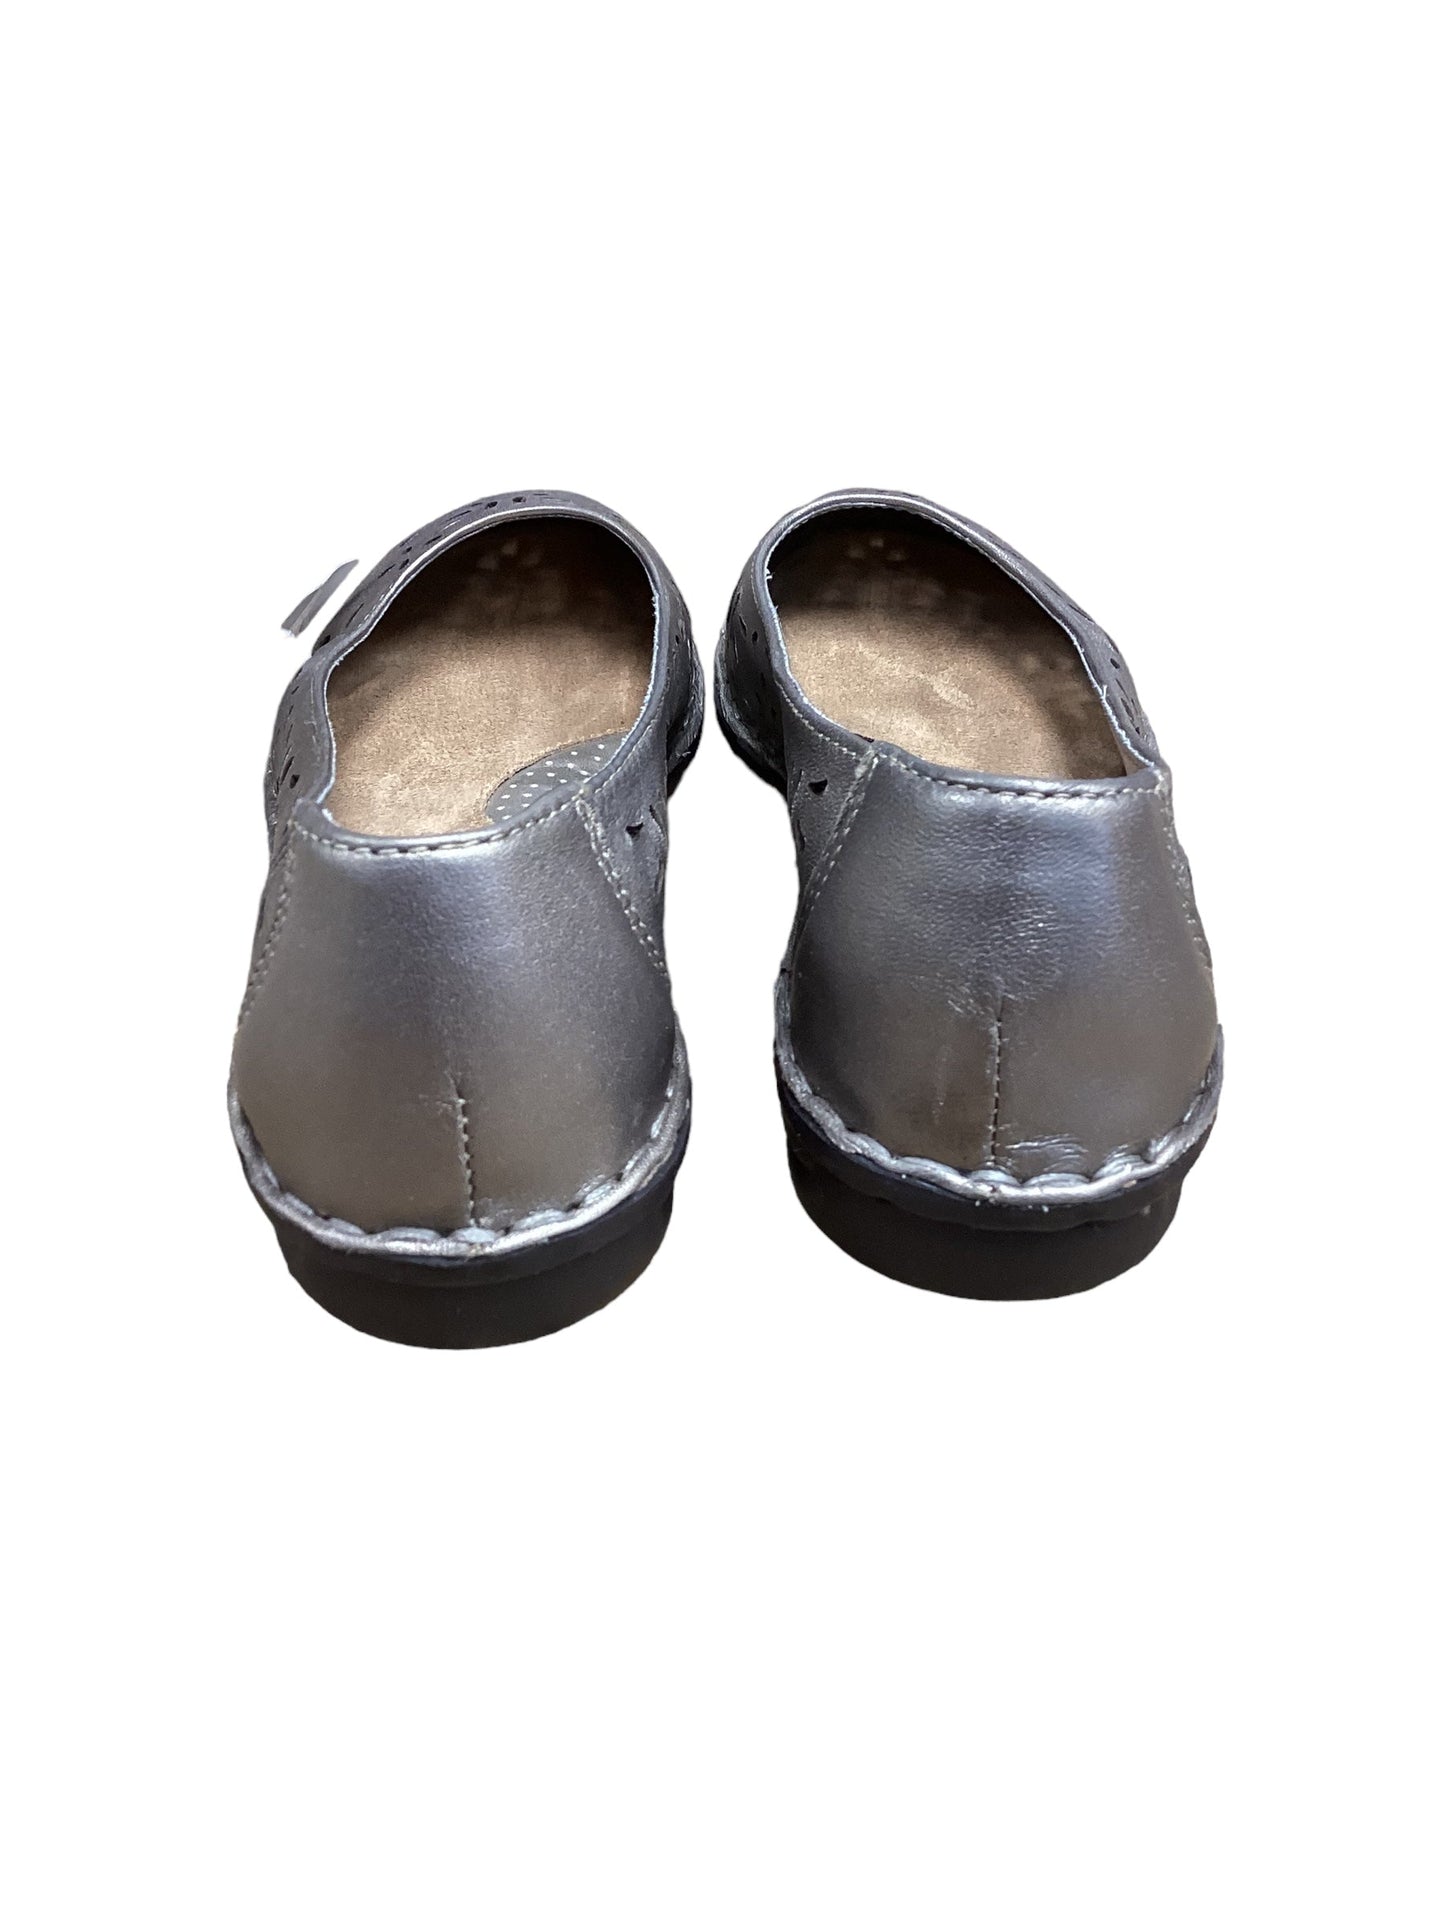 Bronze Shoes Flats White Mountain, Size 7.5